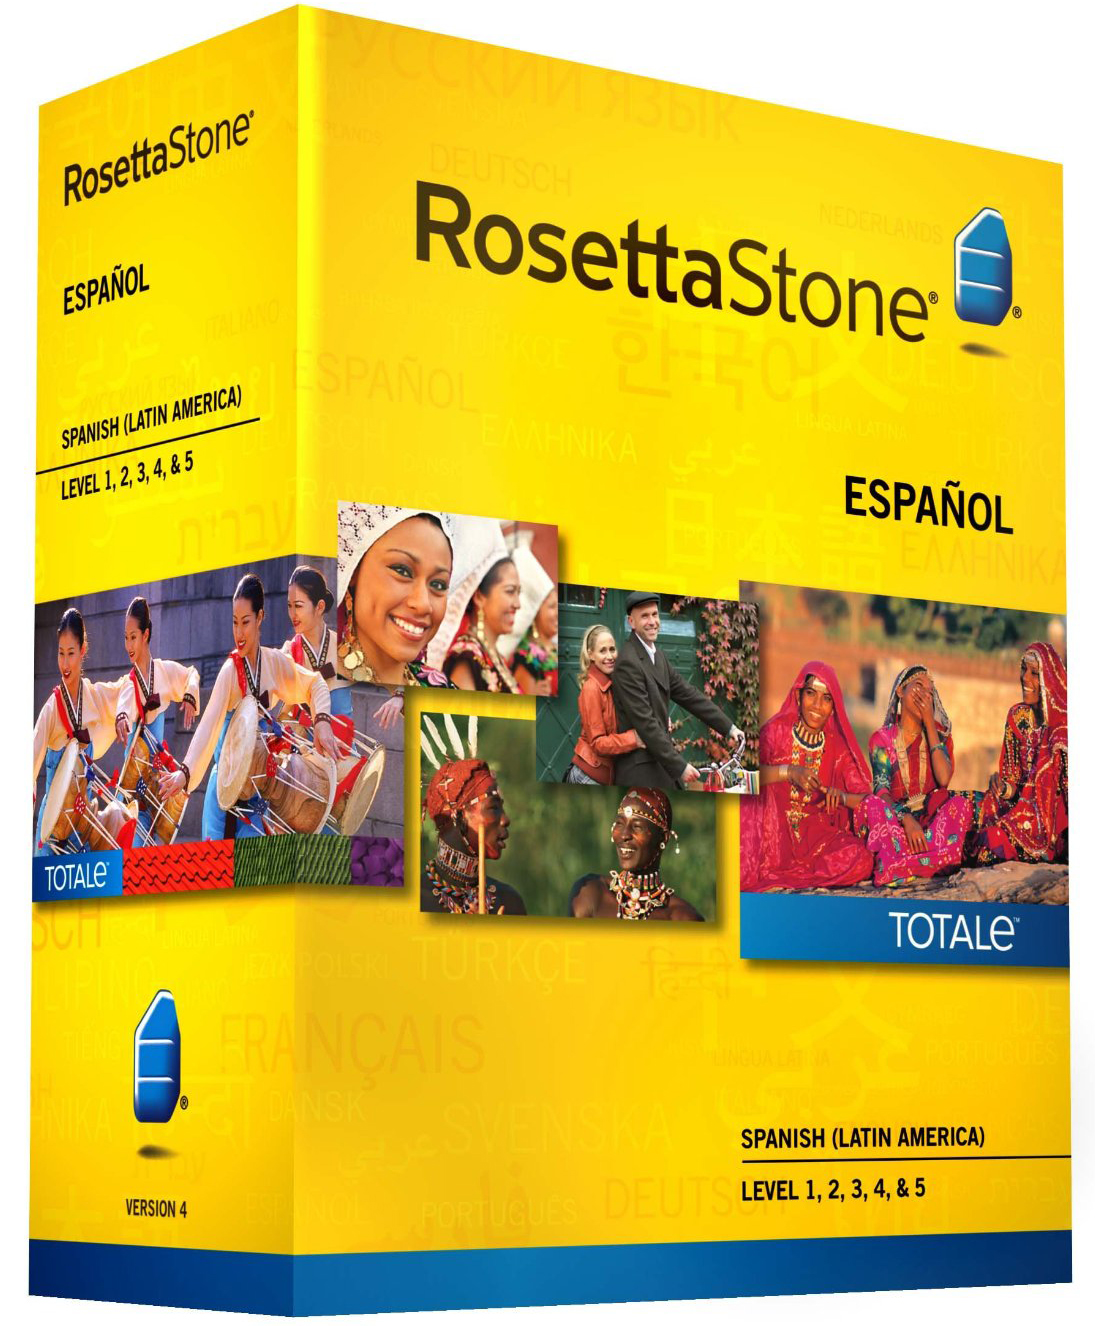 how many levels in rosetta stone spanish